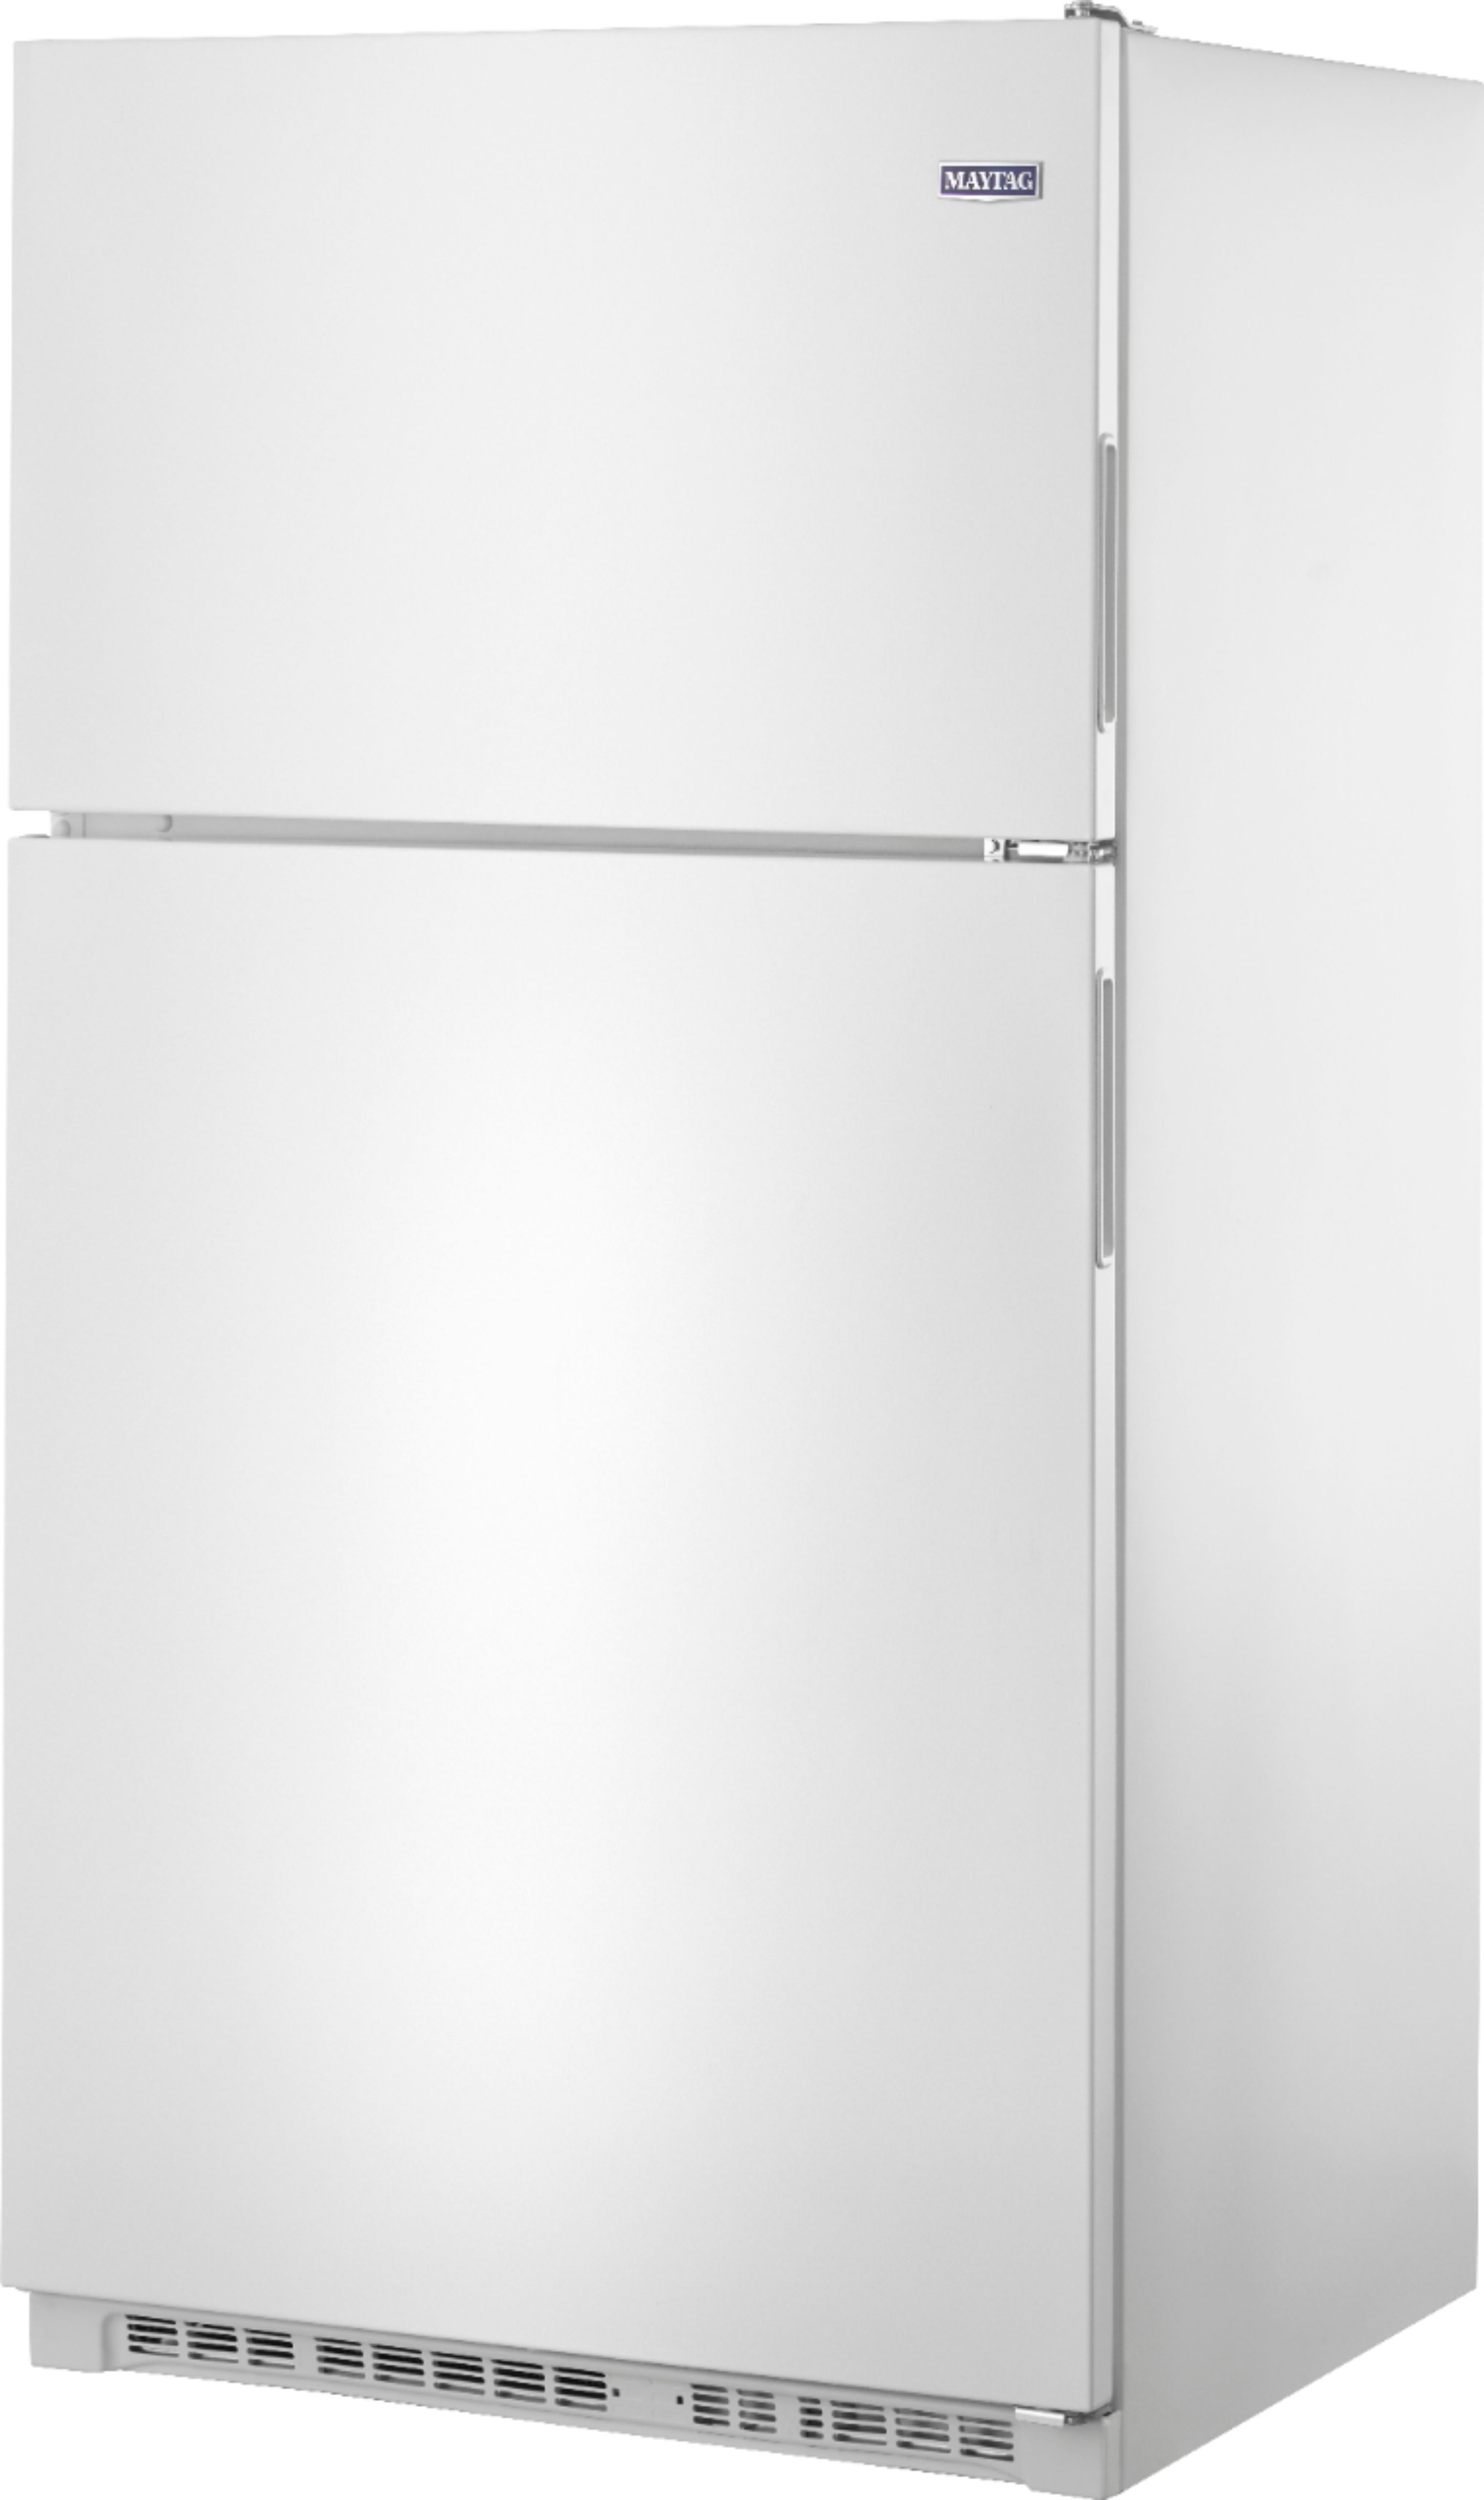 Left View: Maytag - 20.5 Cu. Ft. Top-Freezer Refrigerator - White